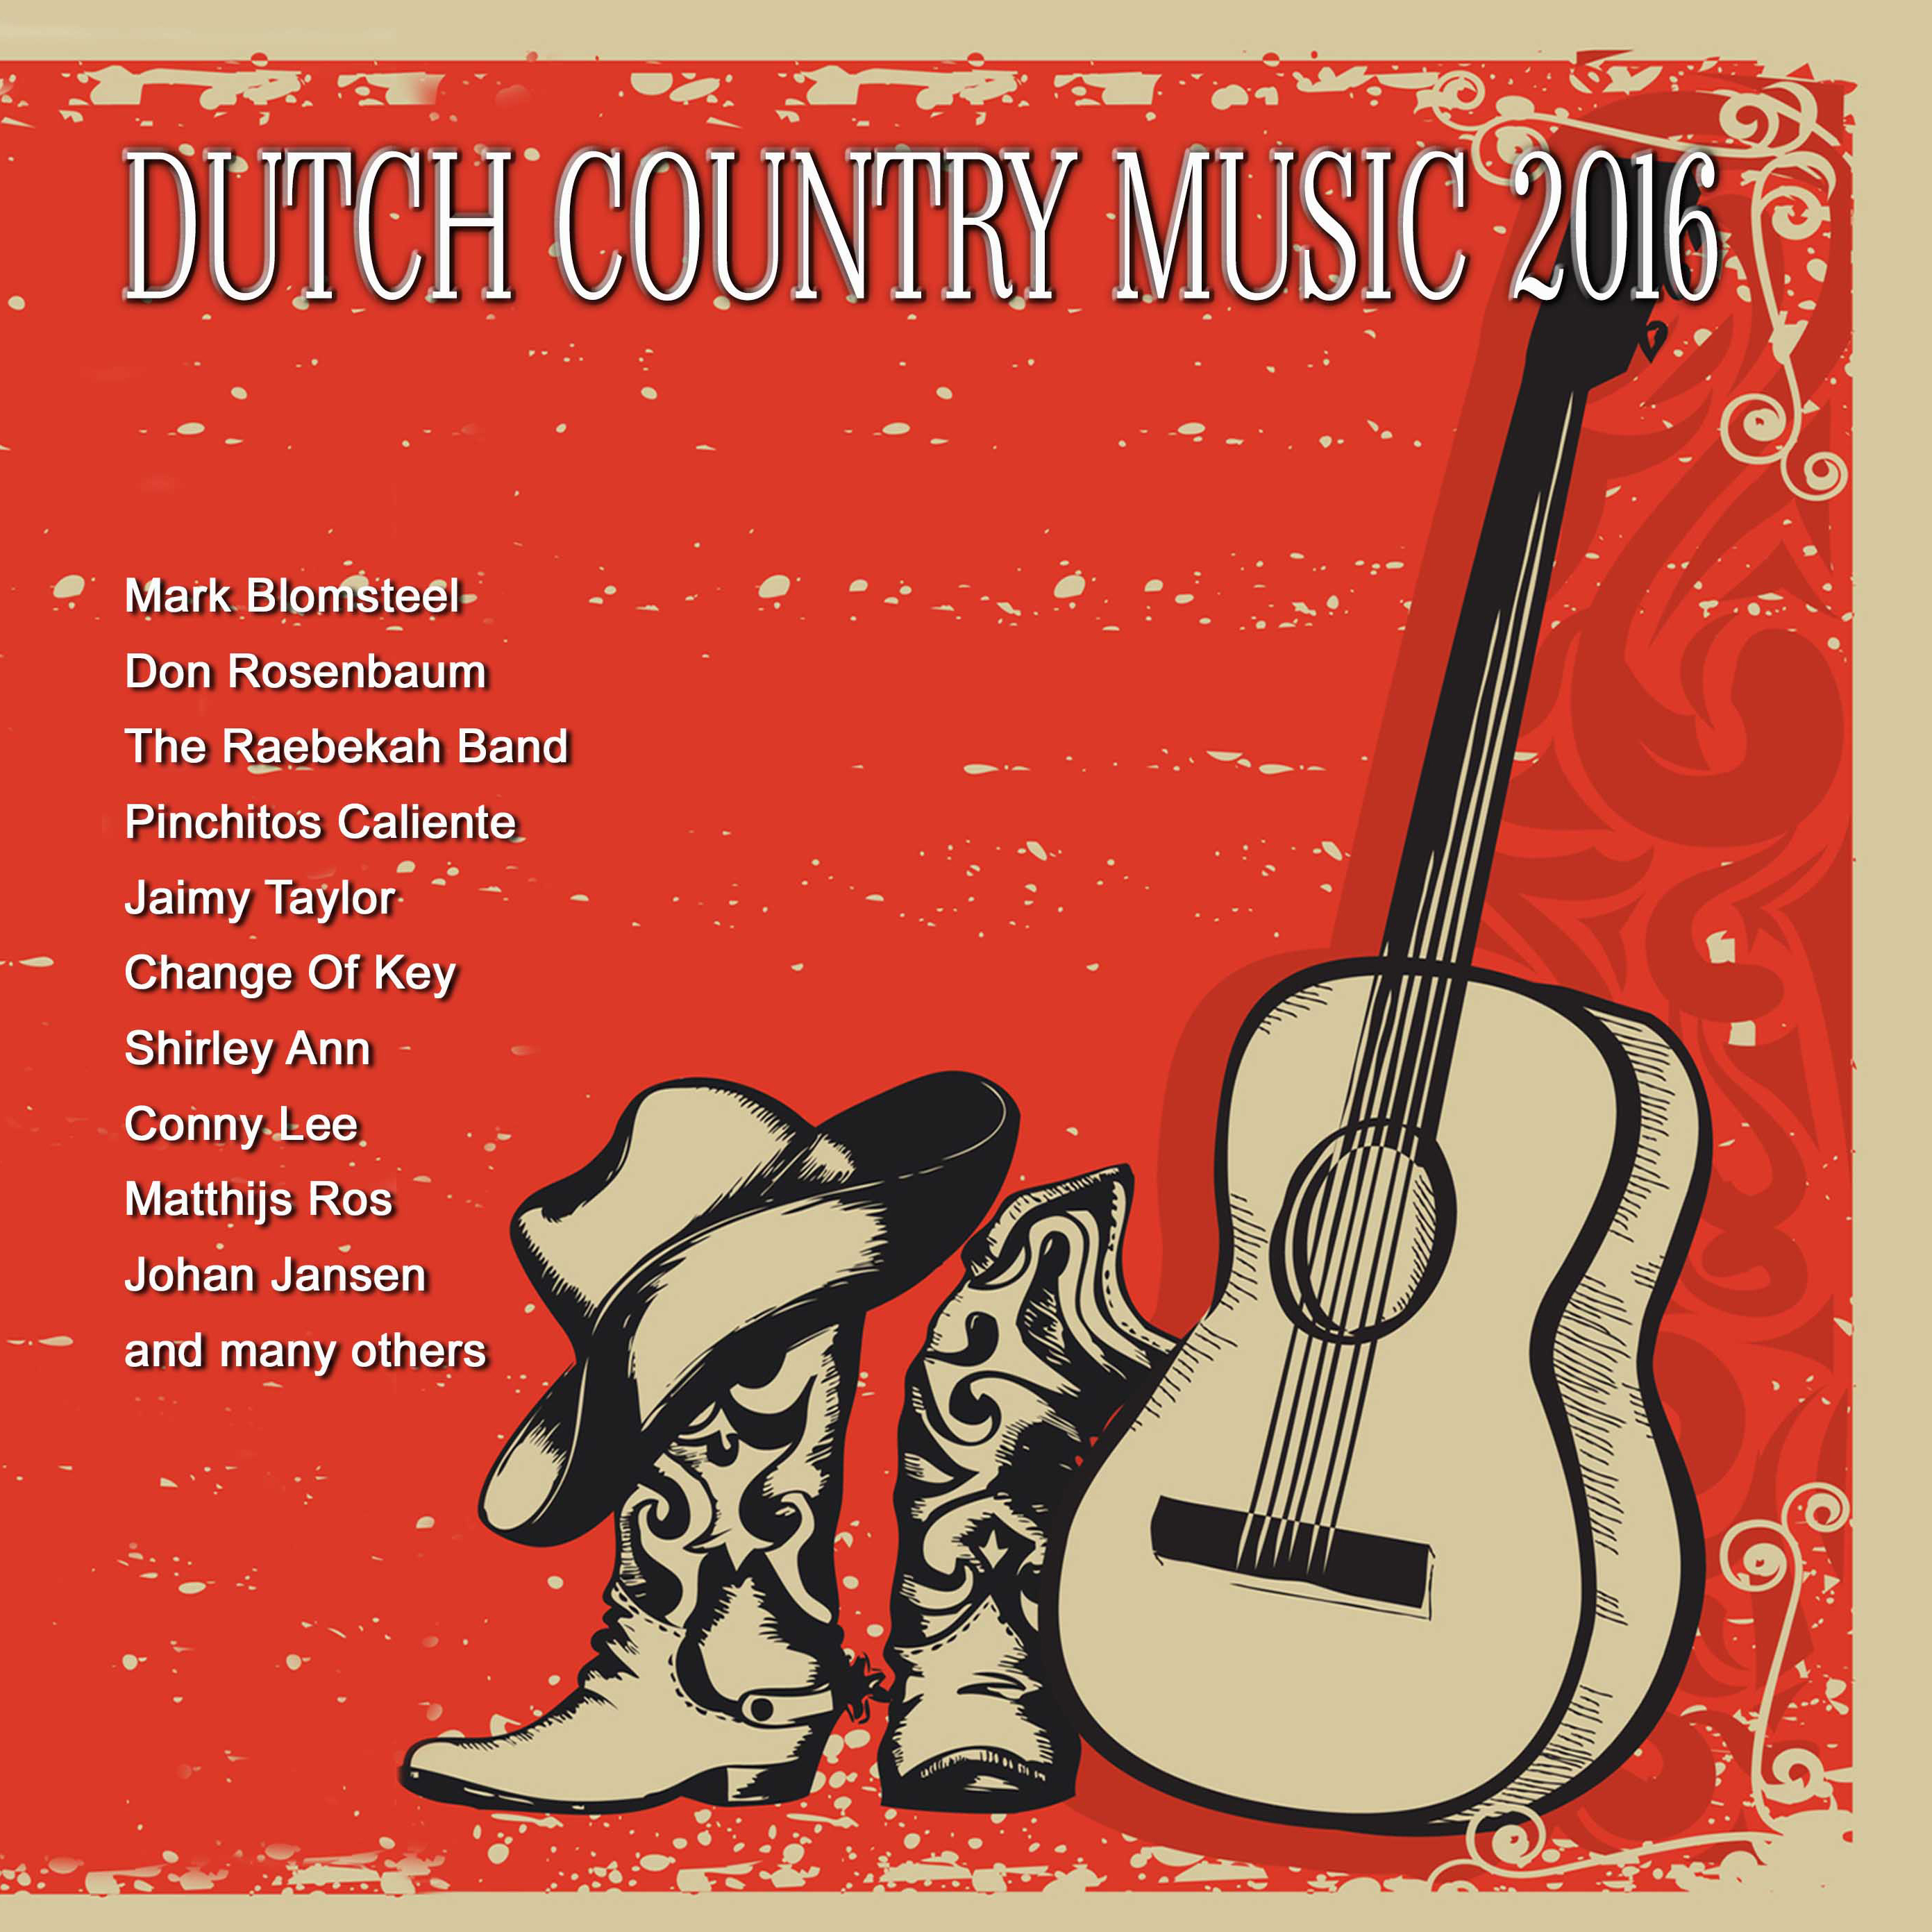 Dutch Country Music (DCMA)